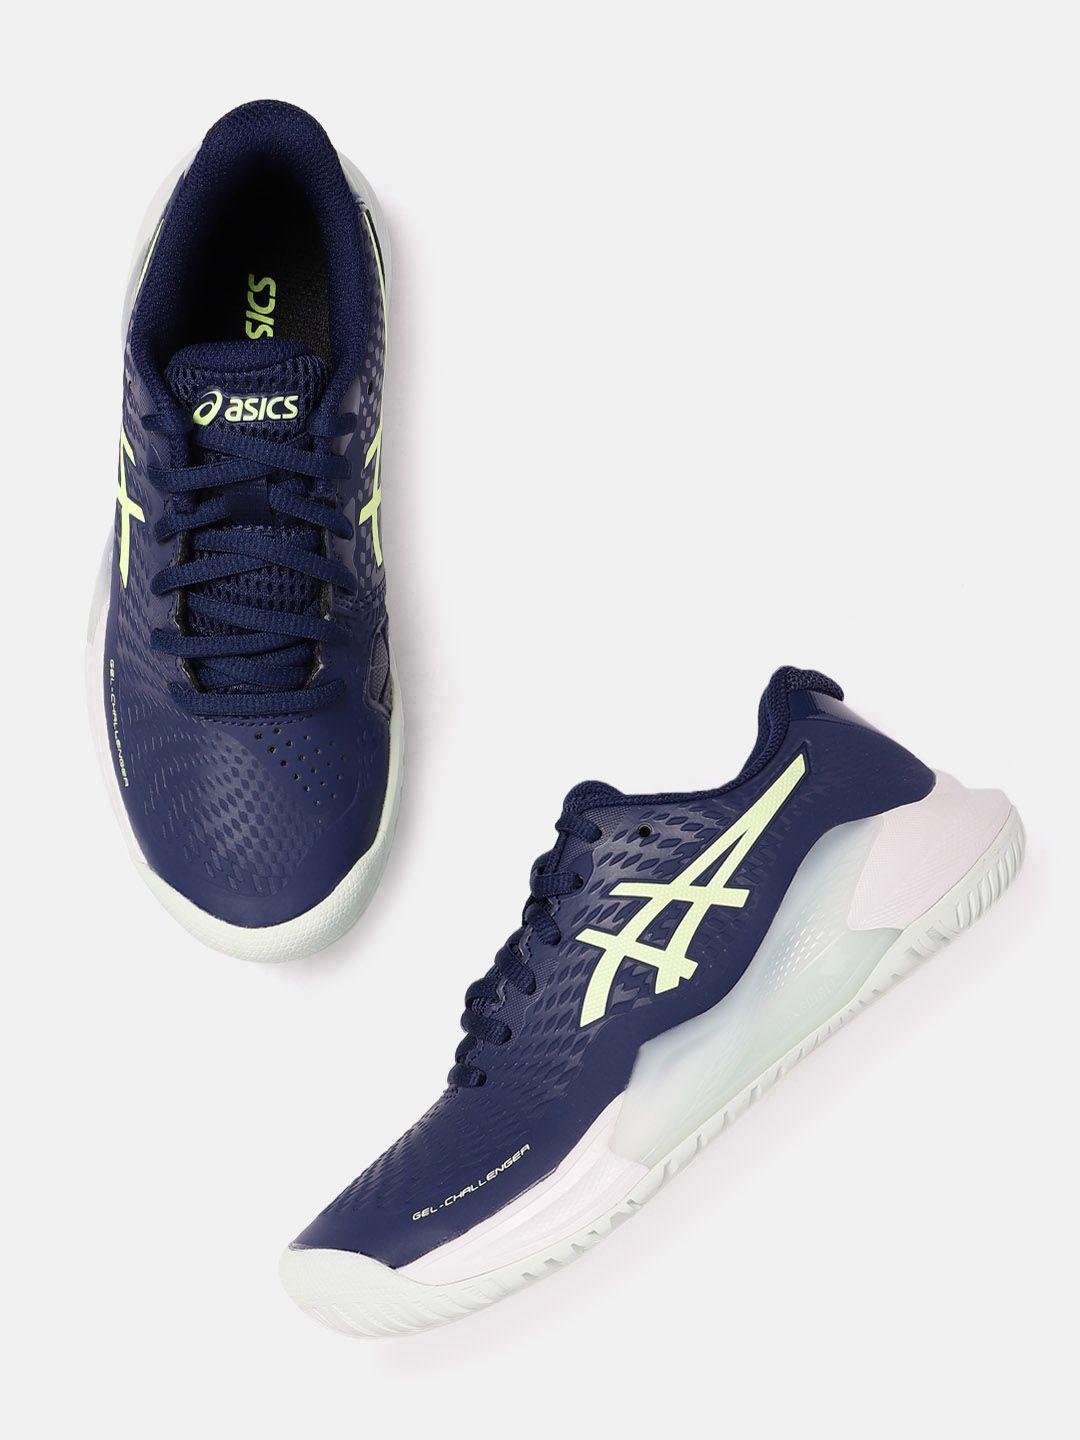 asics-women-brand-logo-detail-round-toe-gel-challenger-14-tennis-shoes